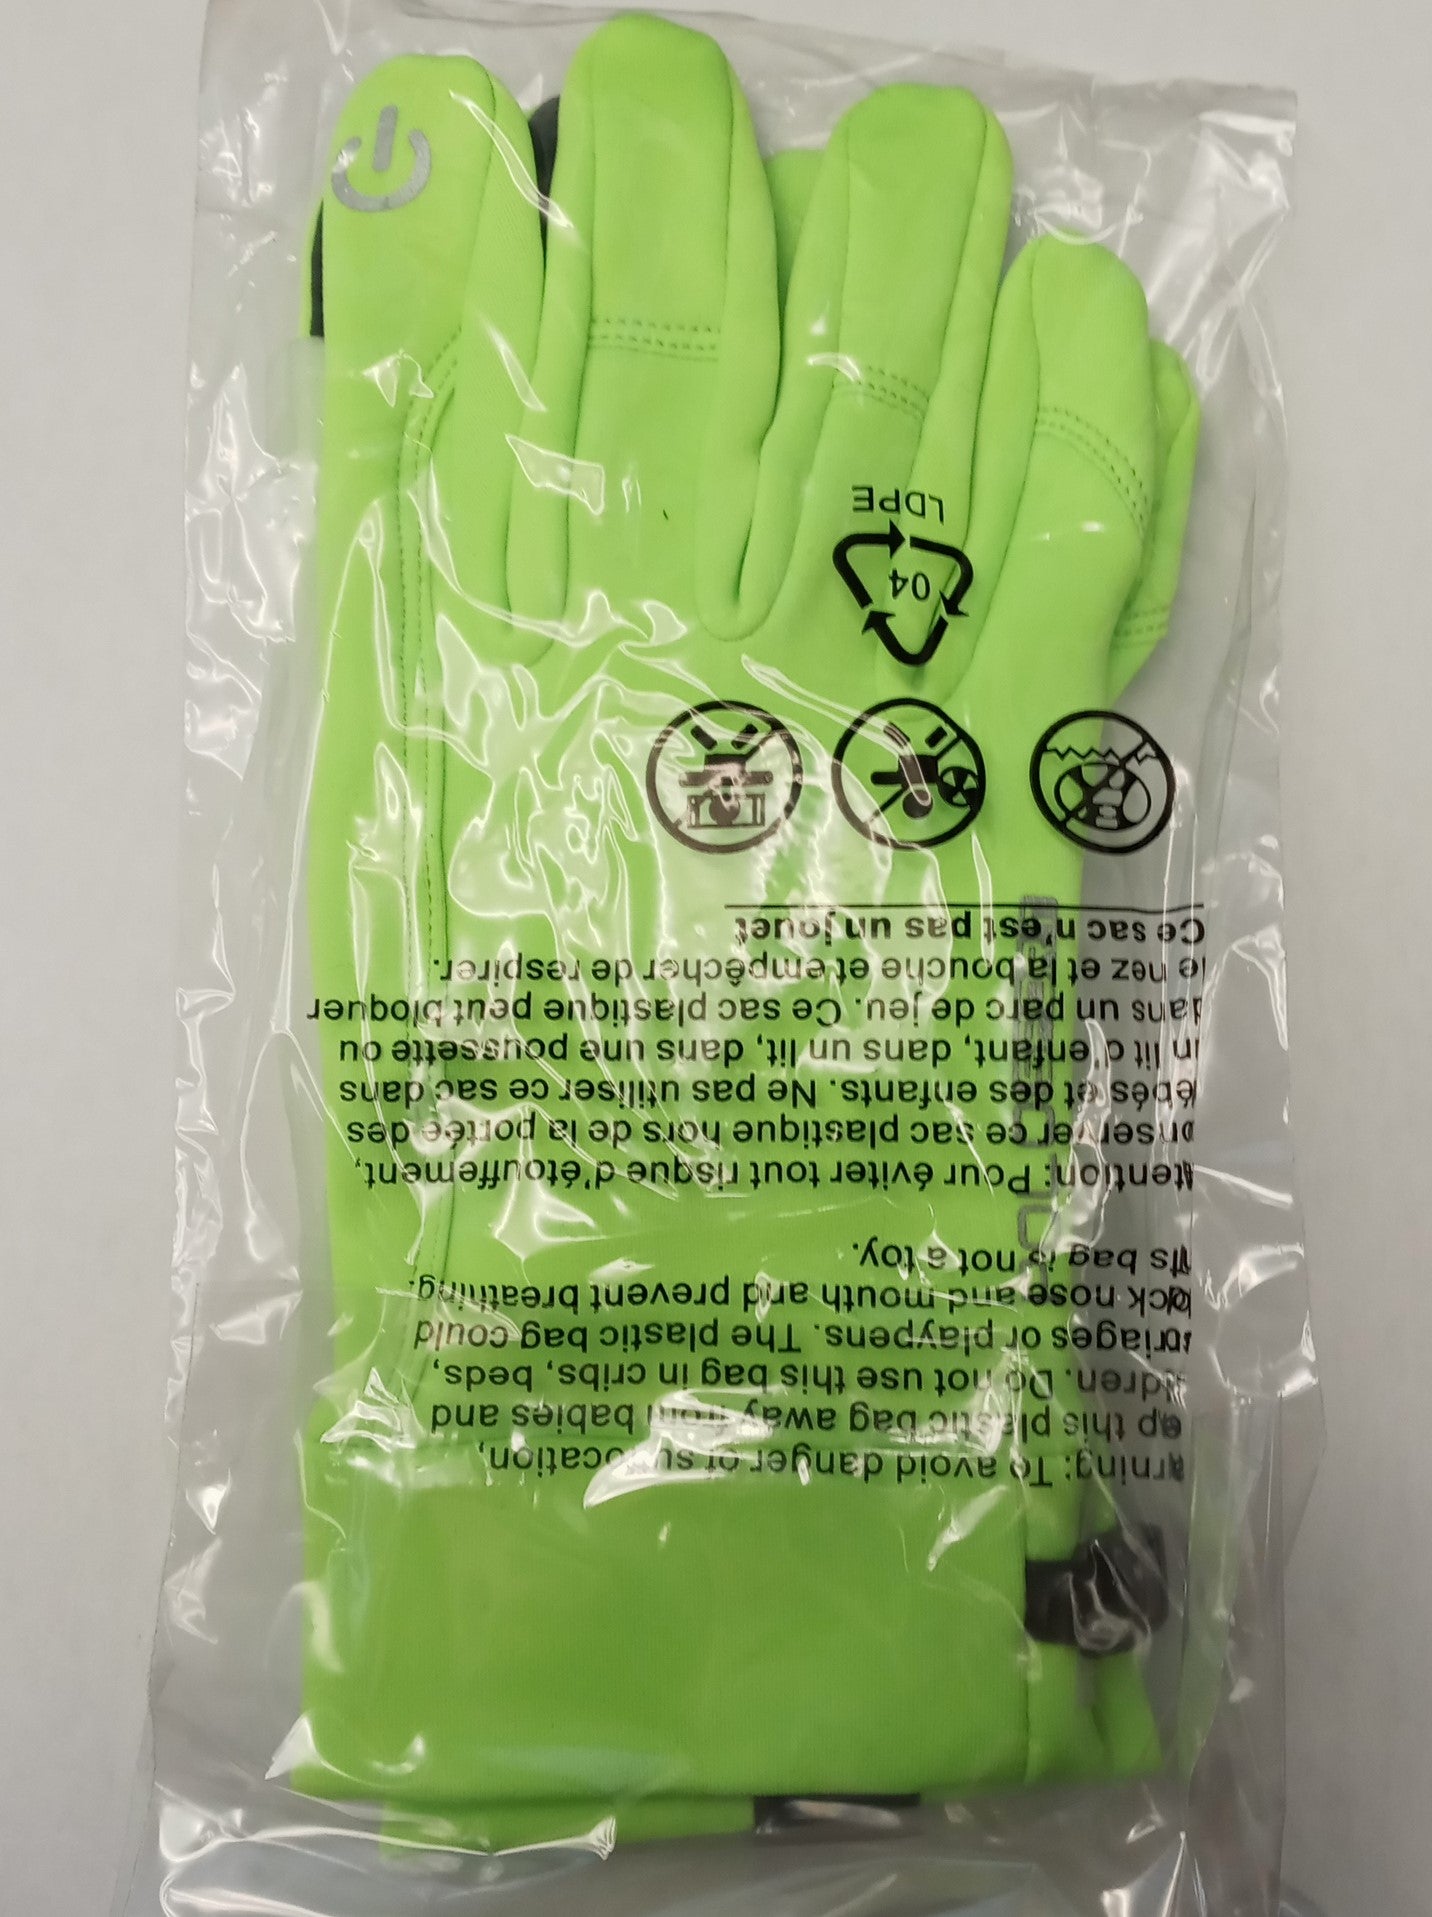 Ralph Lauren 316471 Polo Sport Fleece Lined Training Gloves S/M